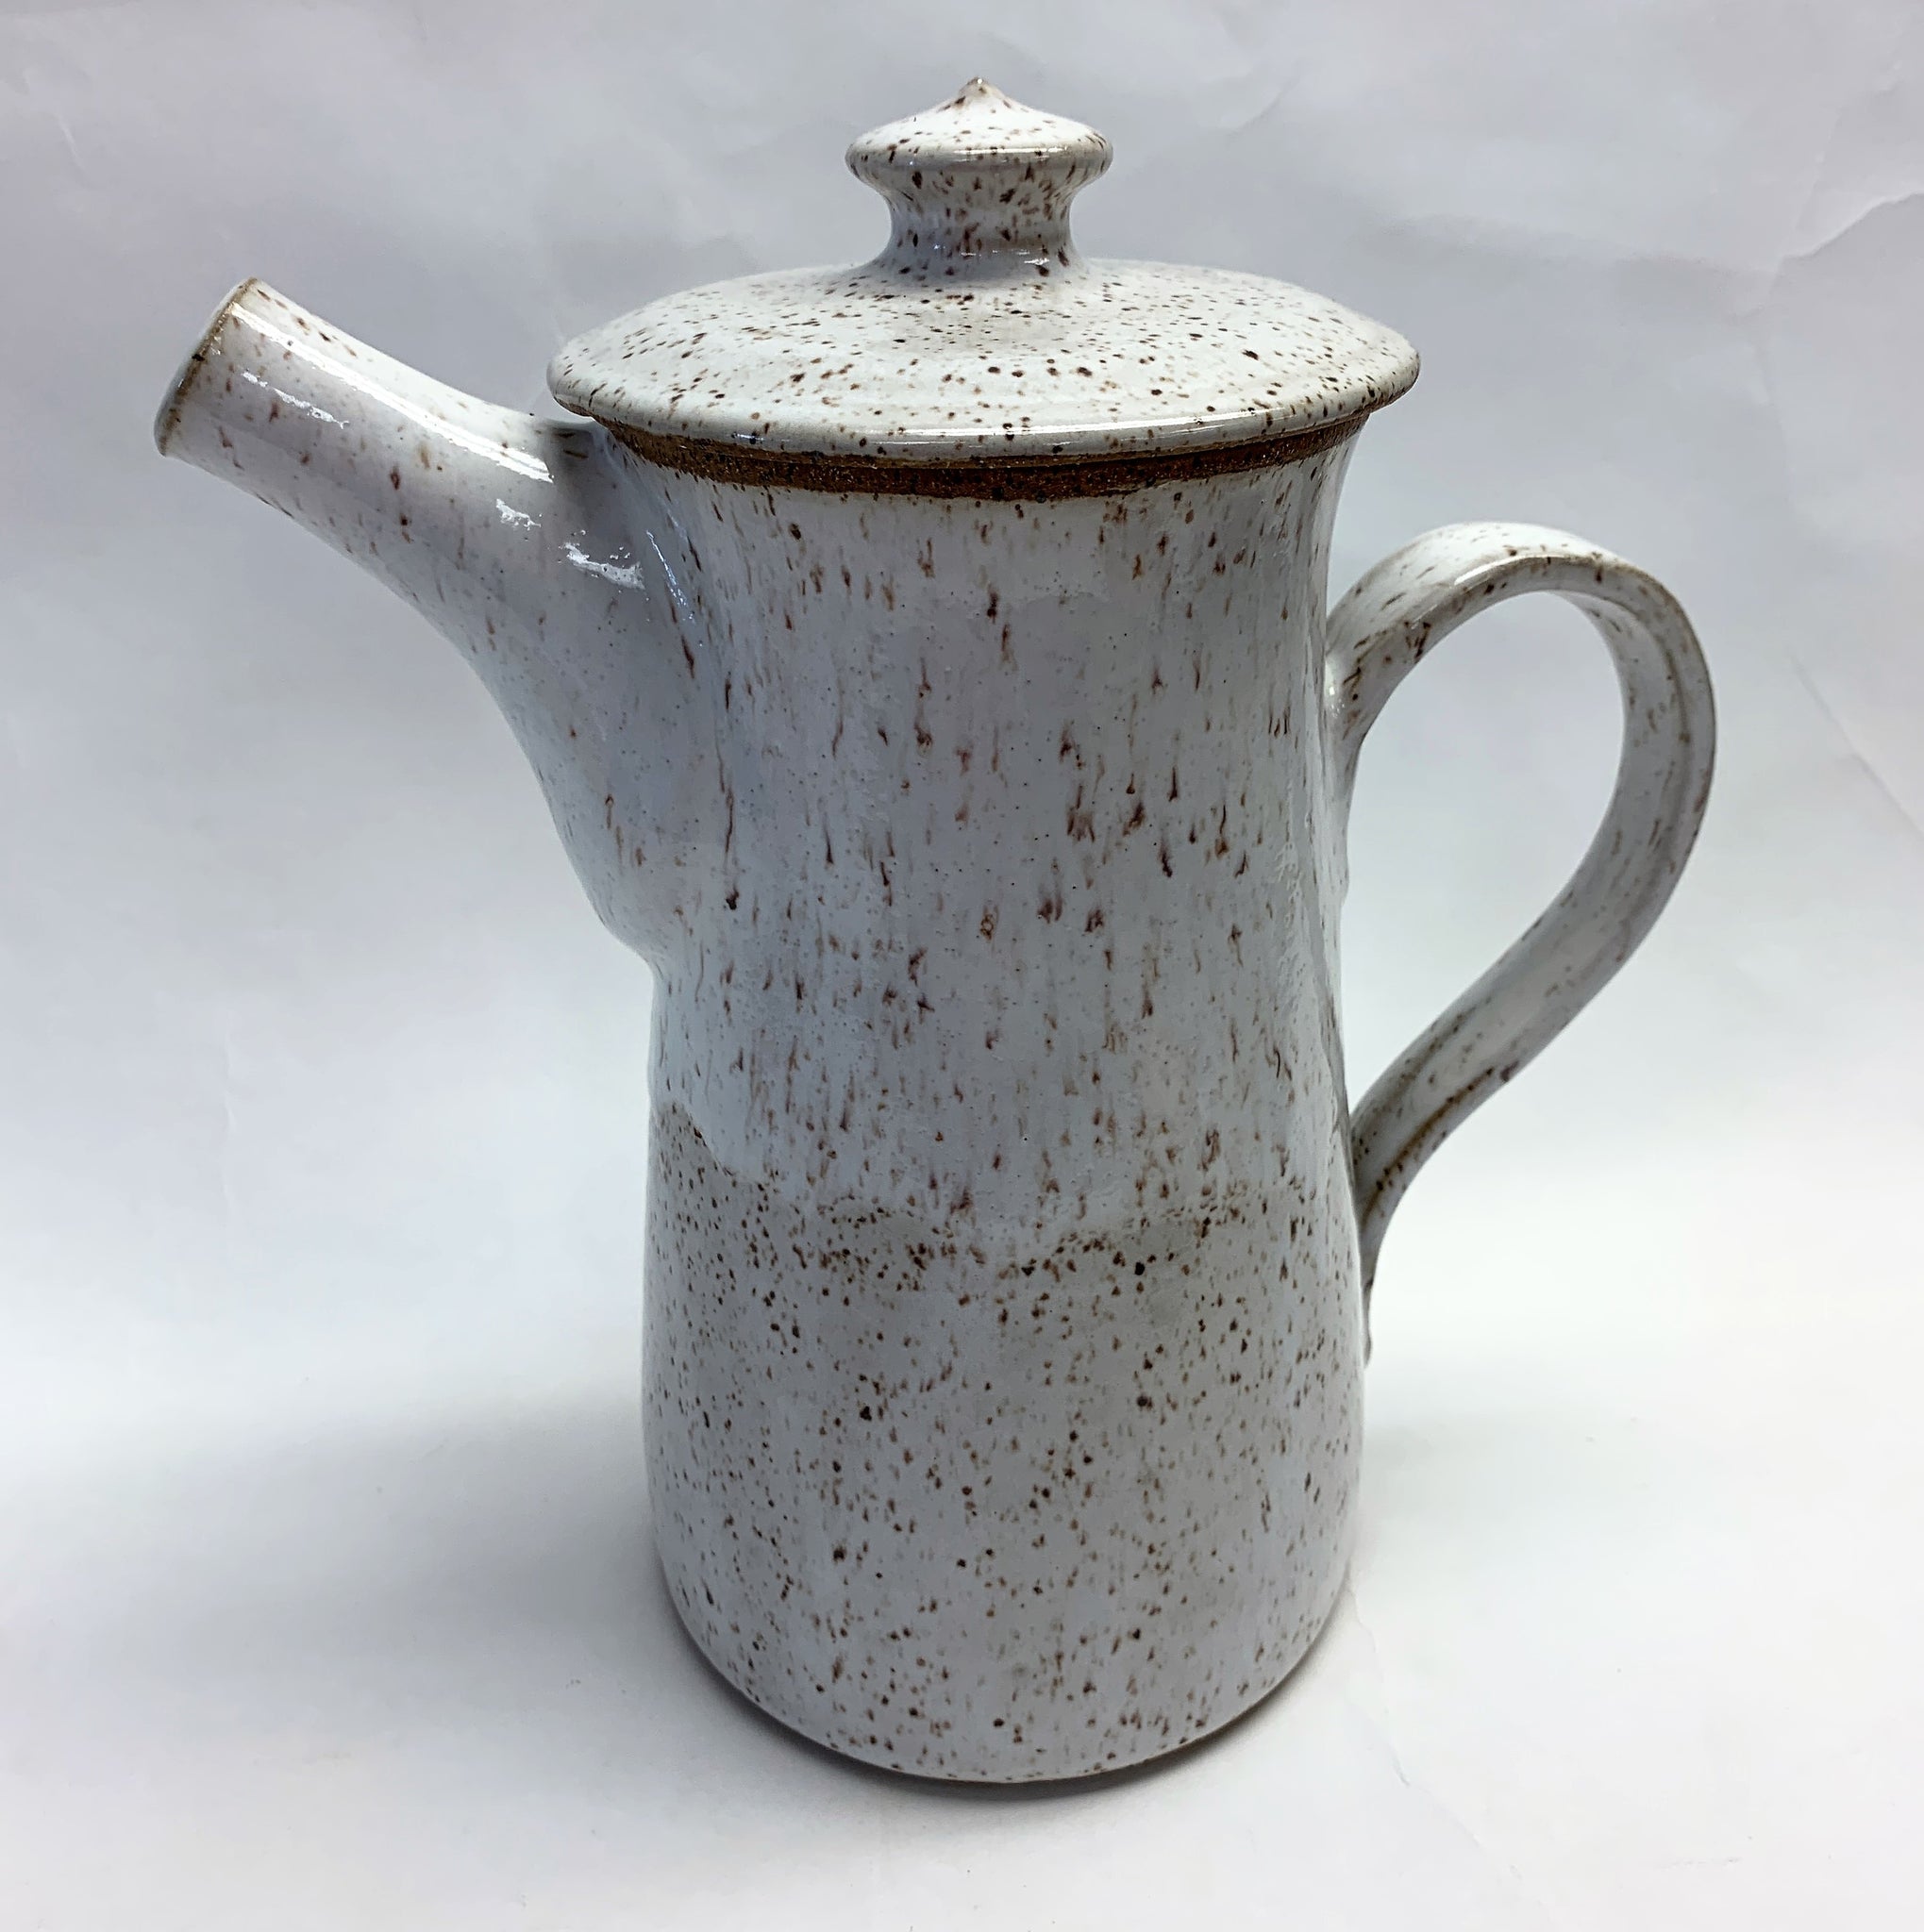 Tall Coffee Pot (or Teapot)